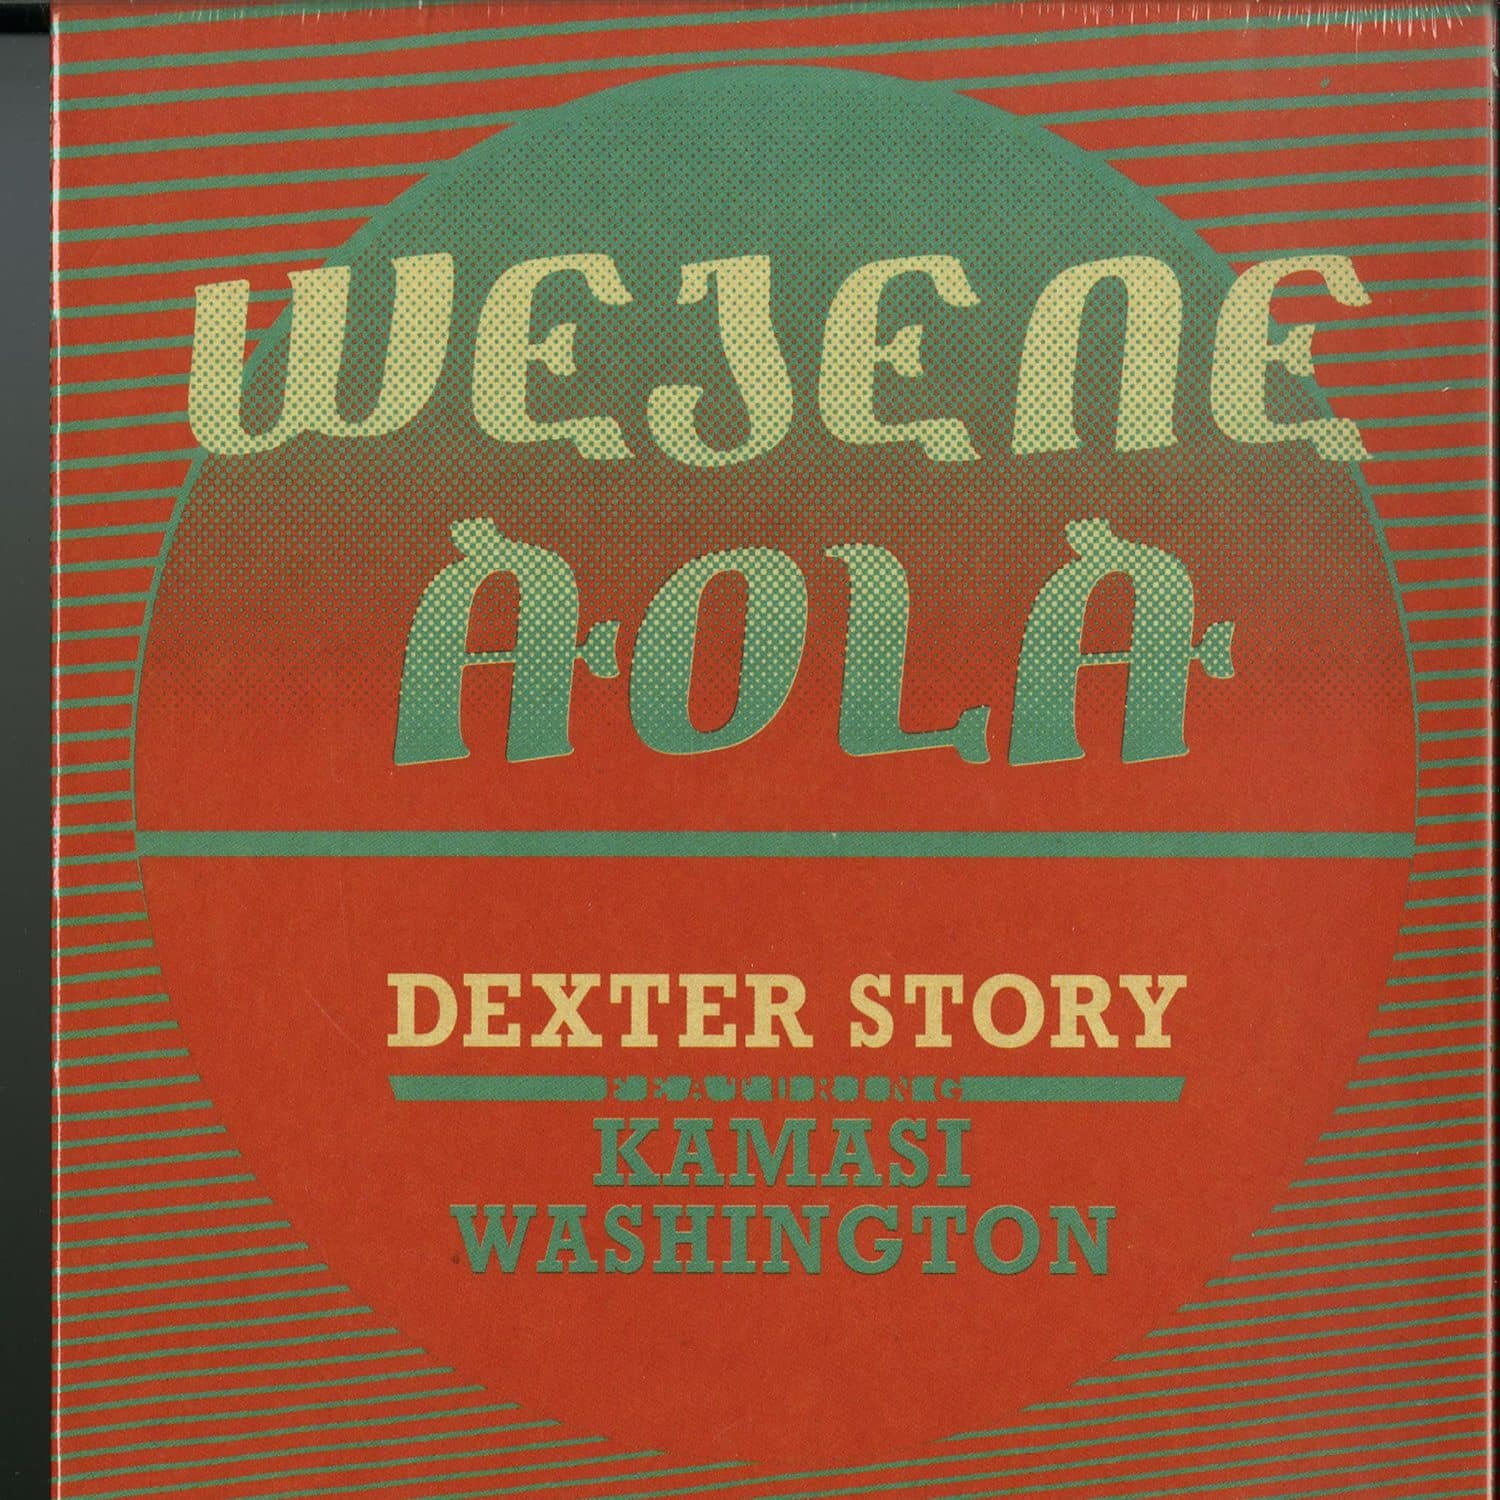 Dexter Story - WEJENE AOLA 